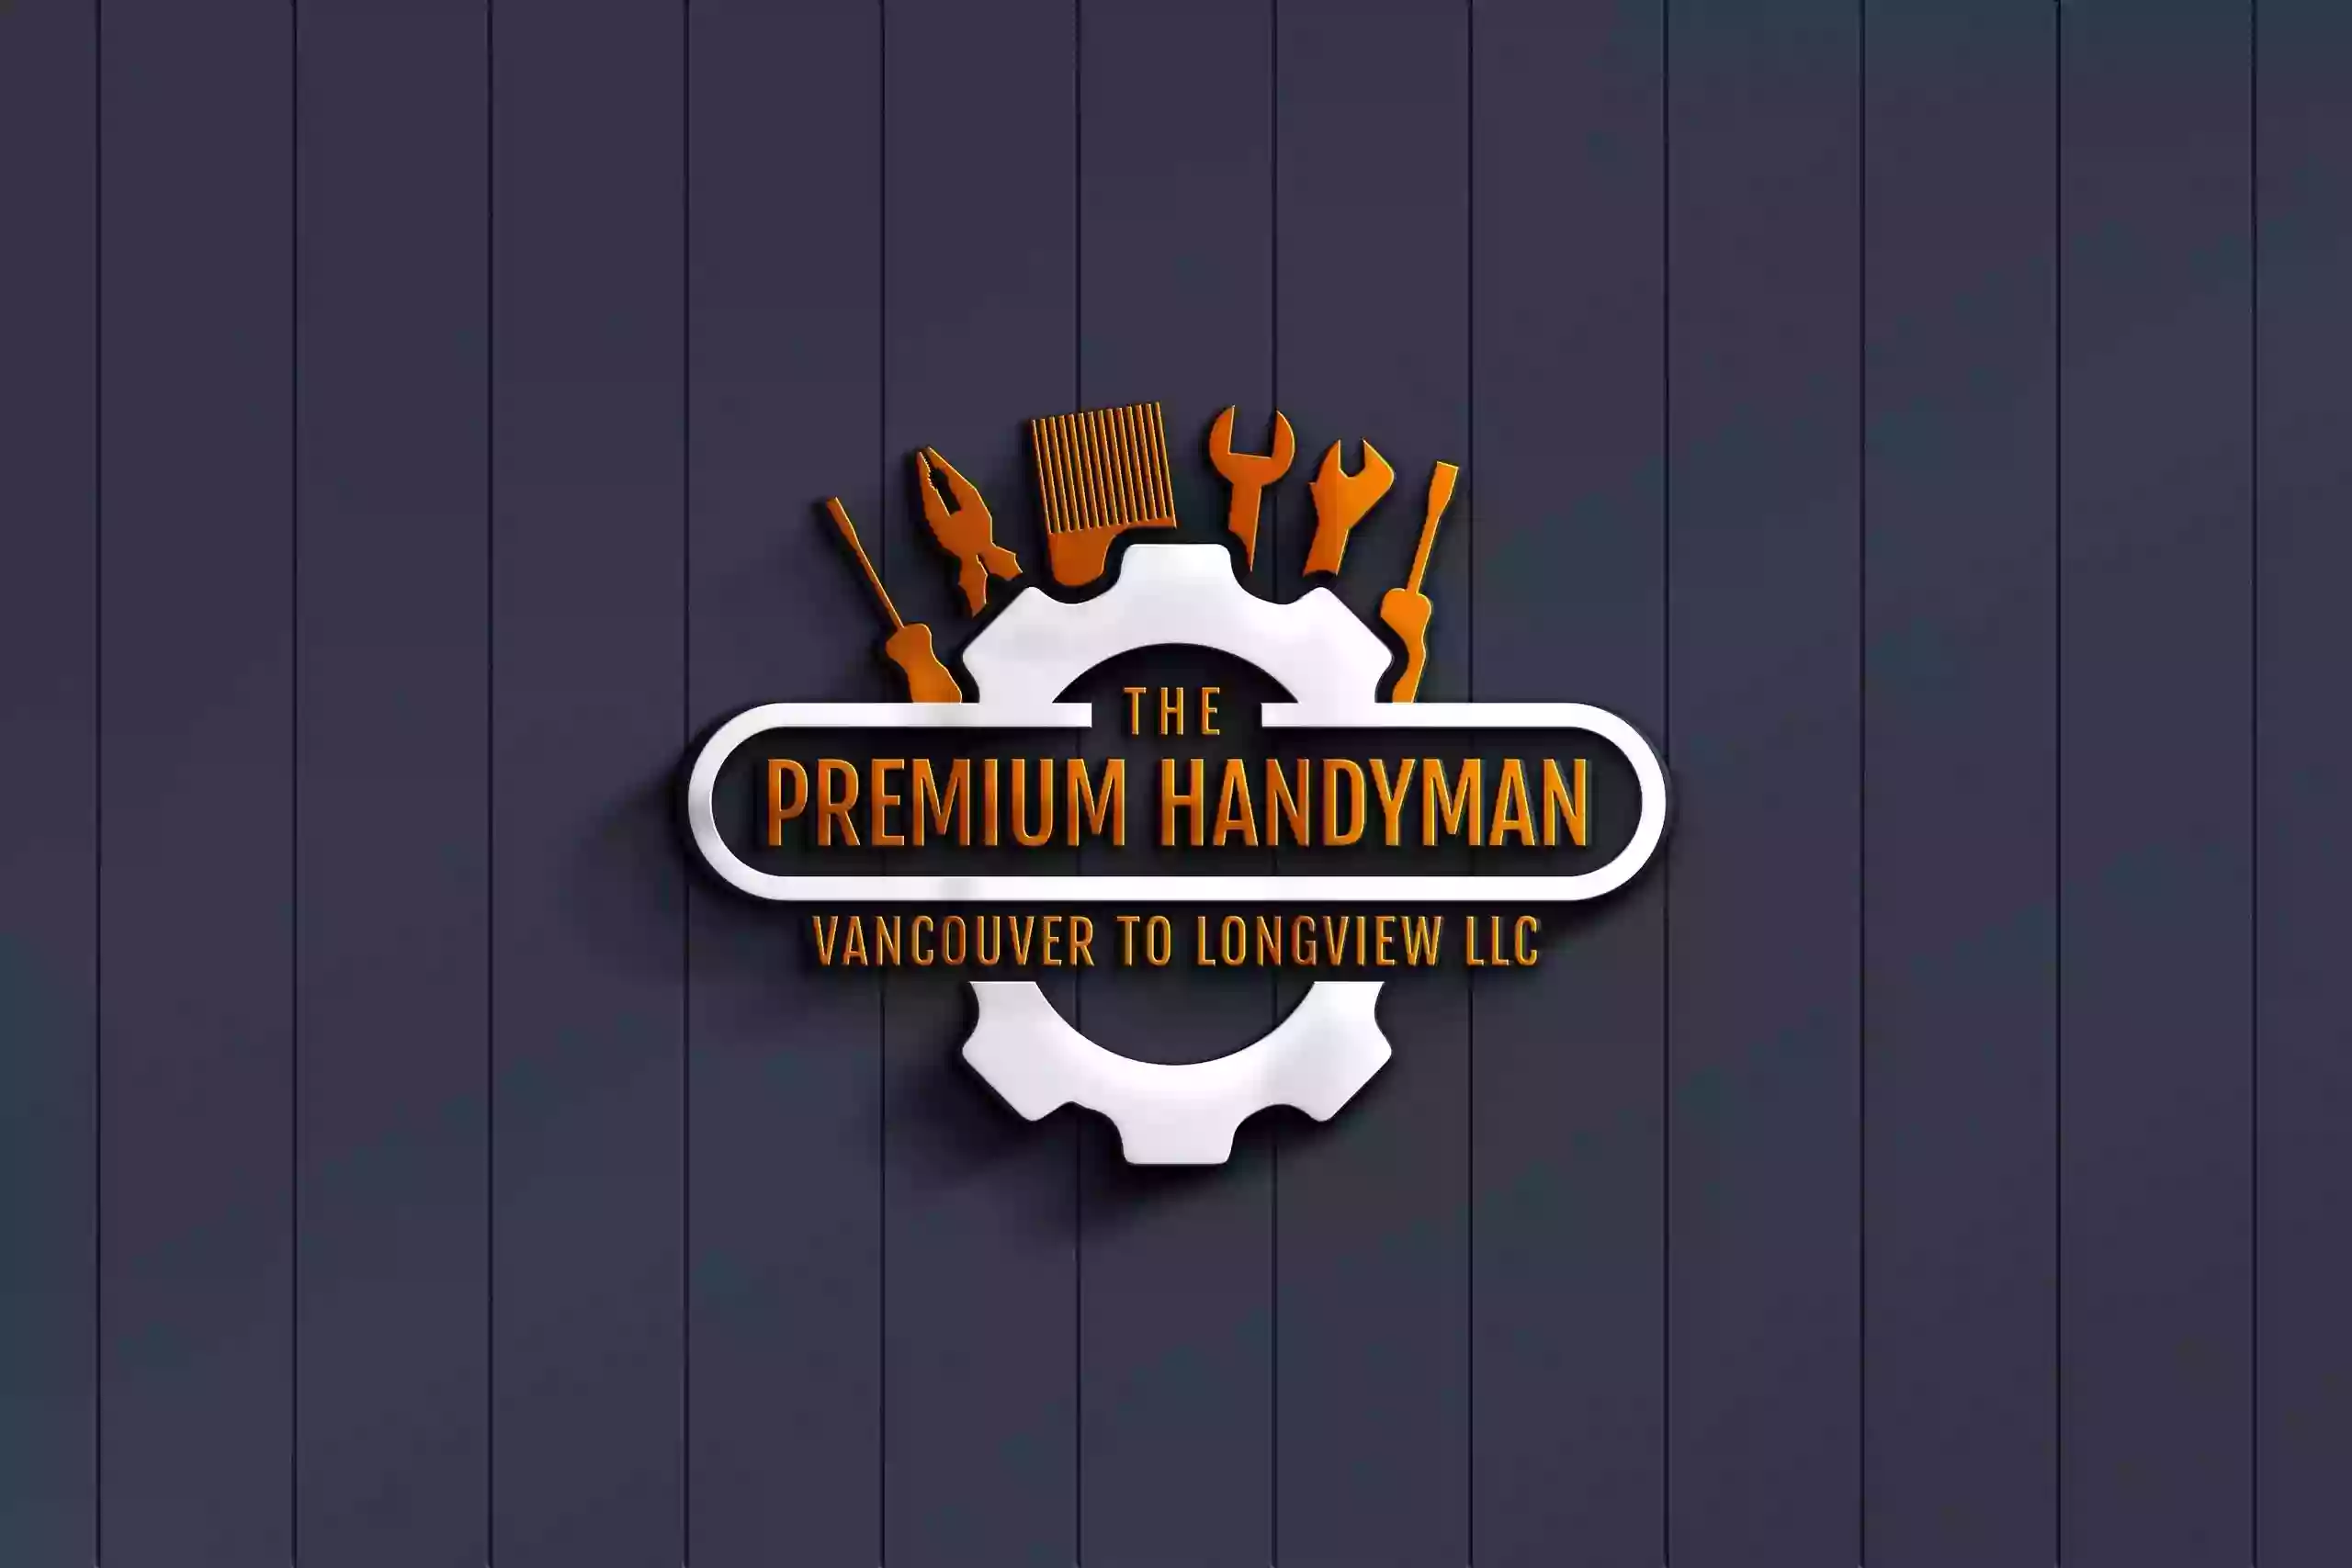 The Premium Handyman Vancouver to Longview LLC